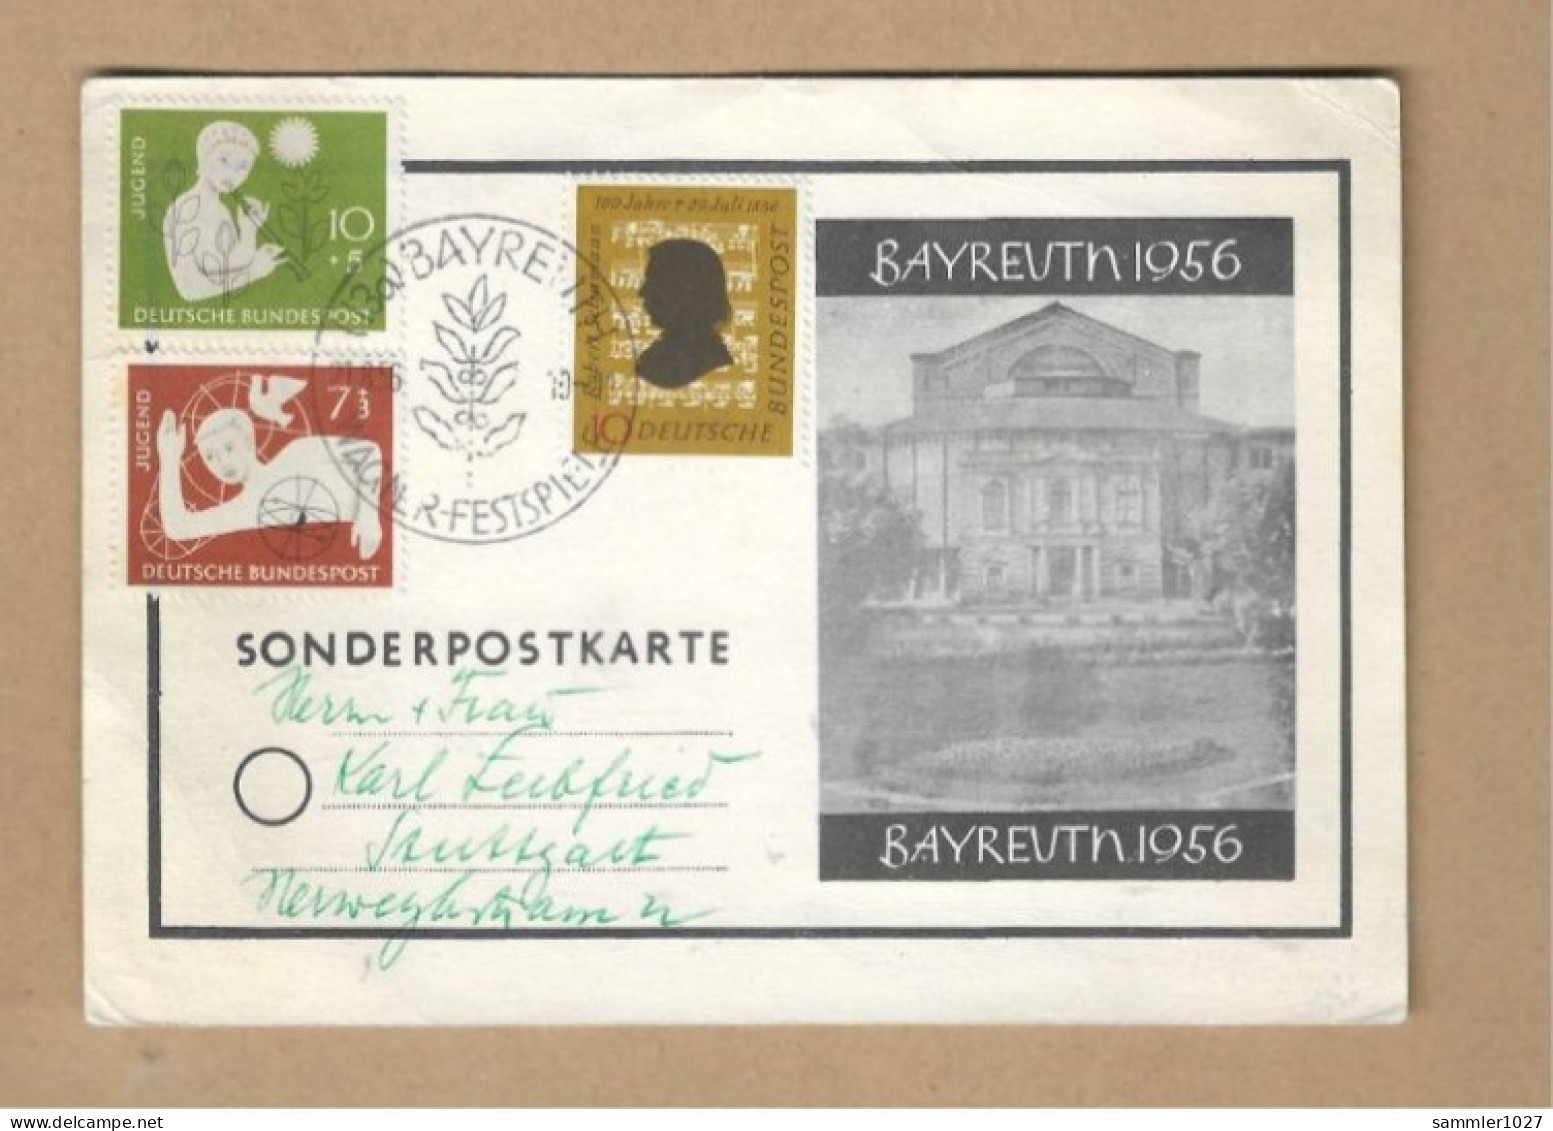 Los Vom 12.05  Sammlerkarte Aus Bayreuth 1956 - Covers & Documents